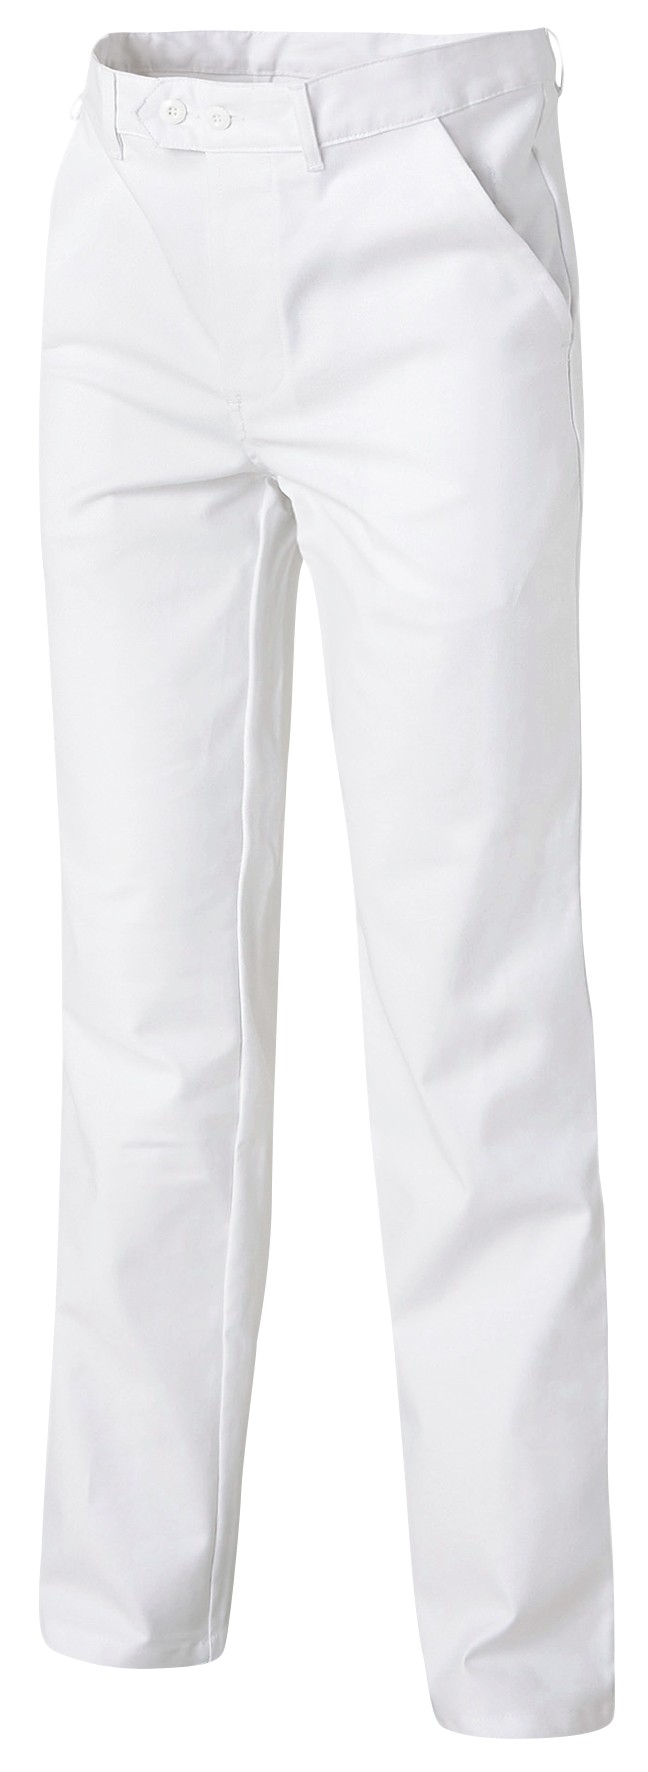 Pantalon de travail Blanc T.6 New pilote - MOLINEL ❘ Bricoman